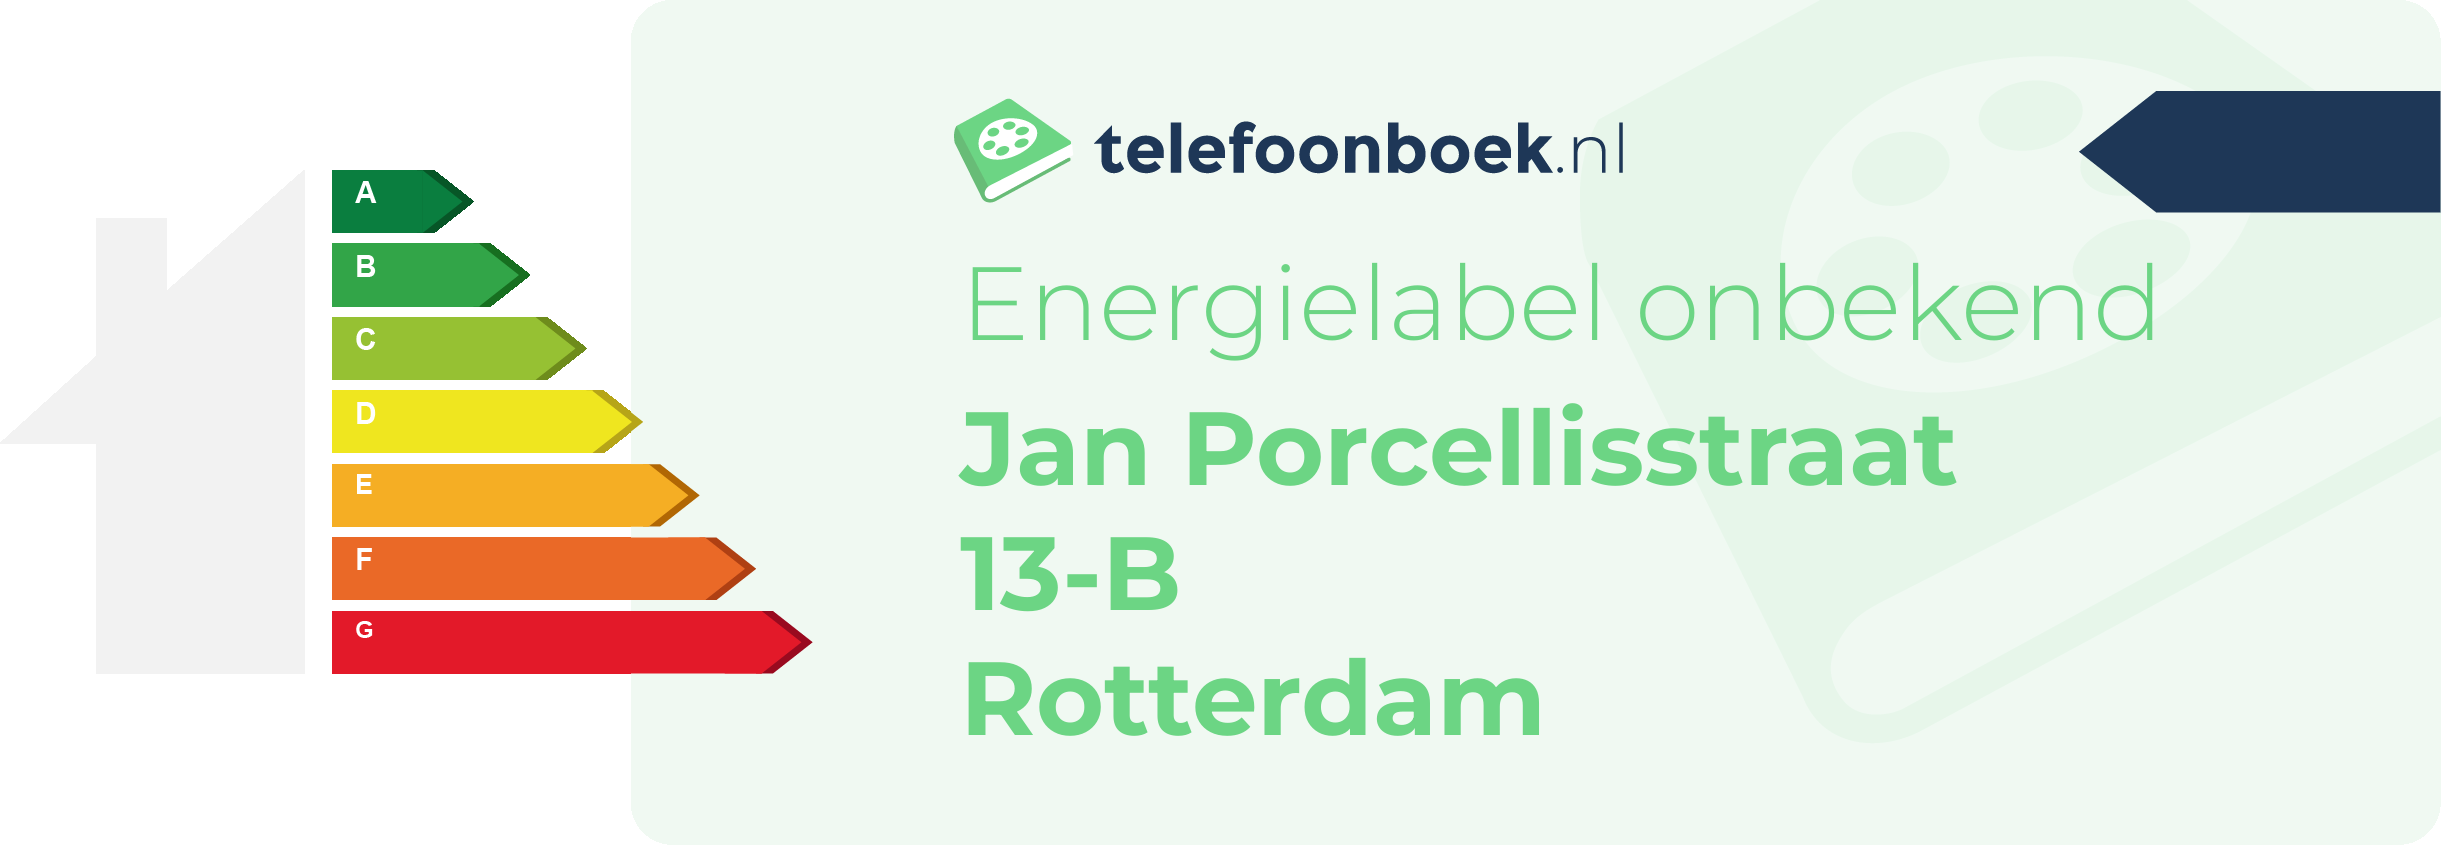 Energielabel Jan Porcellisstraat 13-B Rotterdam